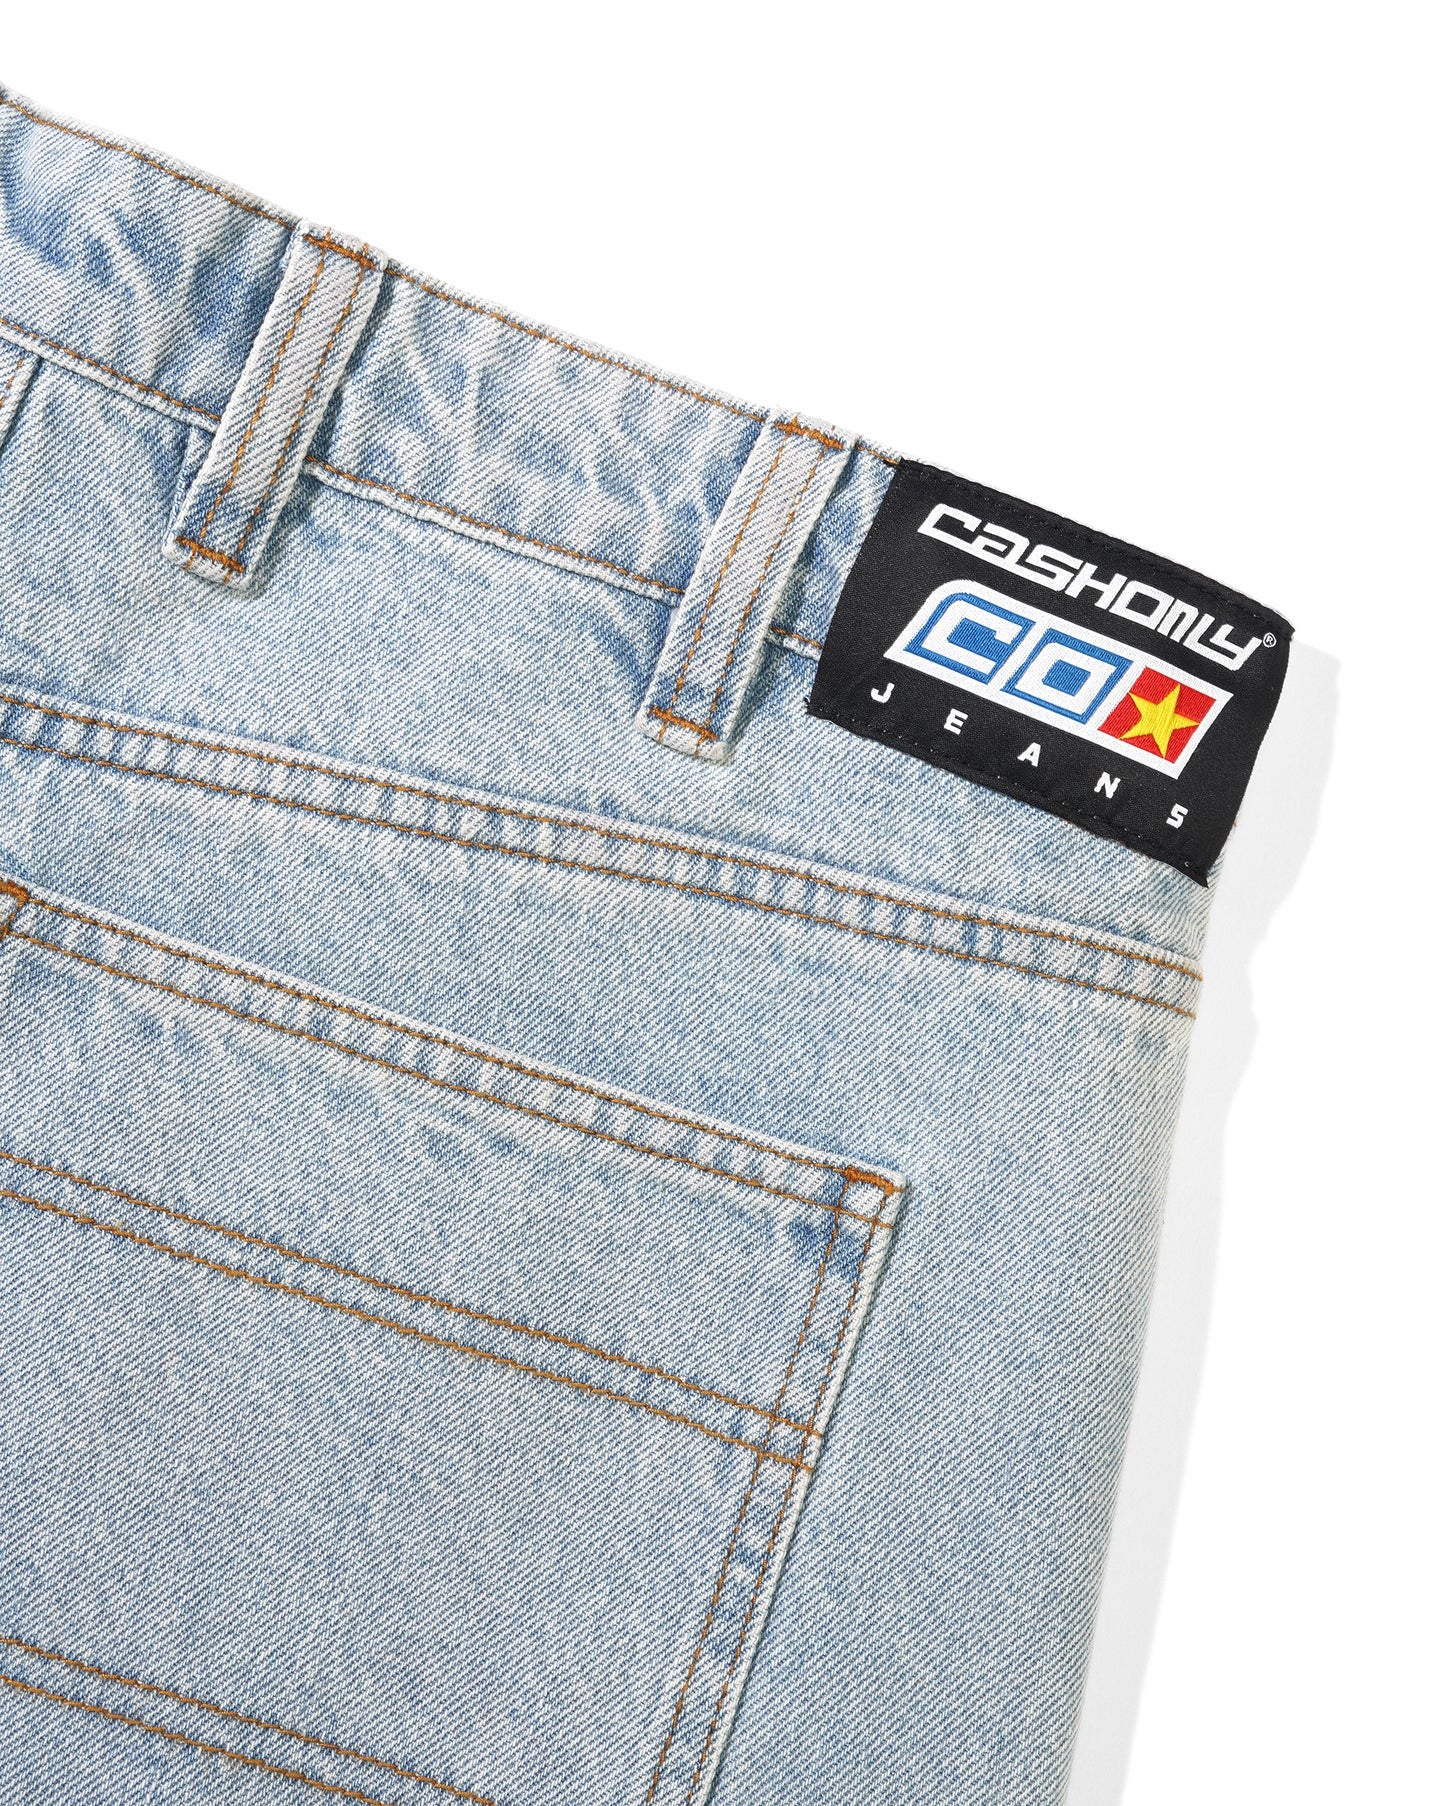 Cash Only - Aleka Cargo Jeans Light Wash